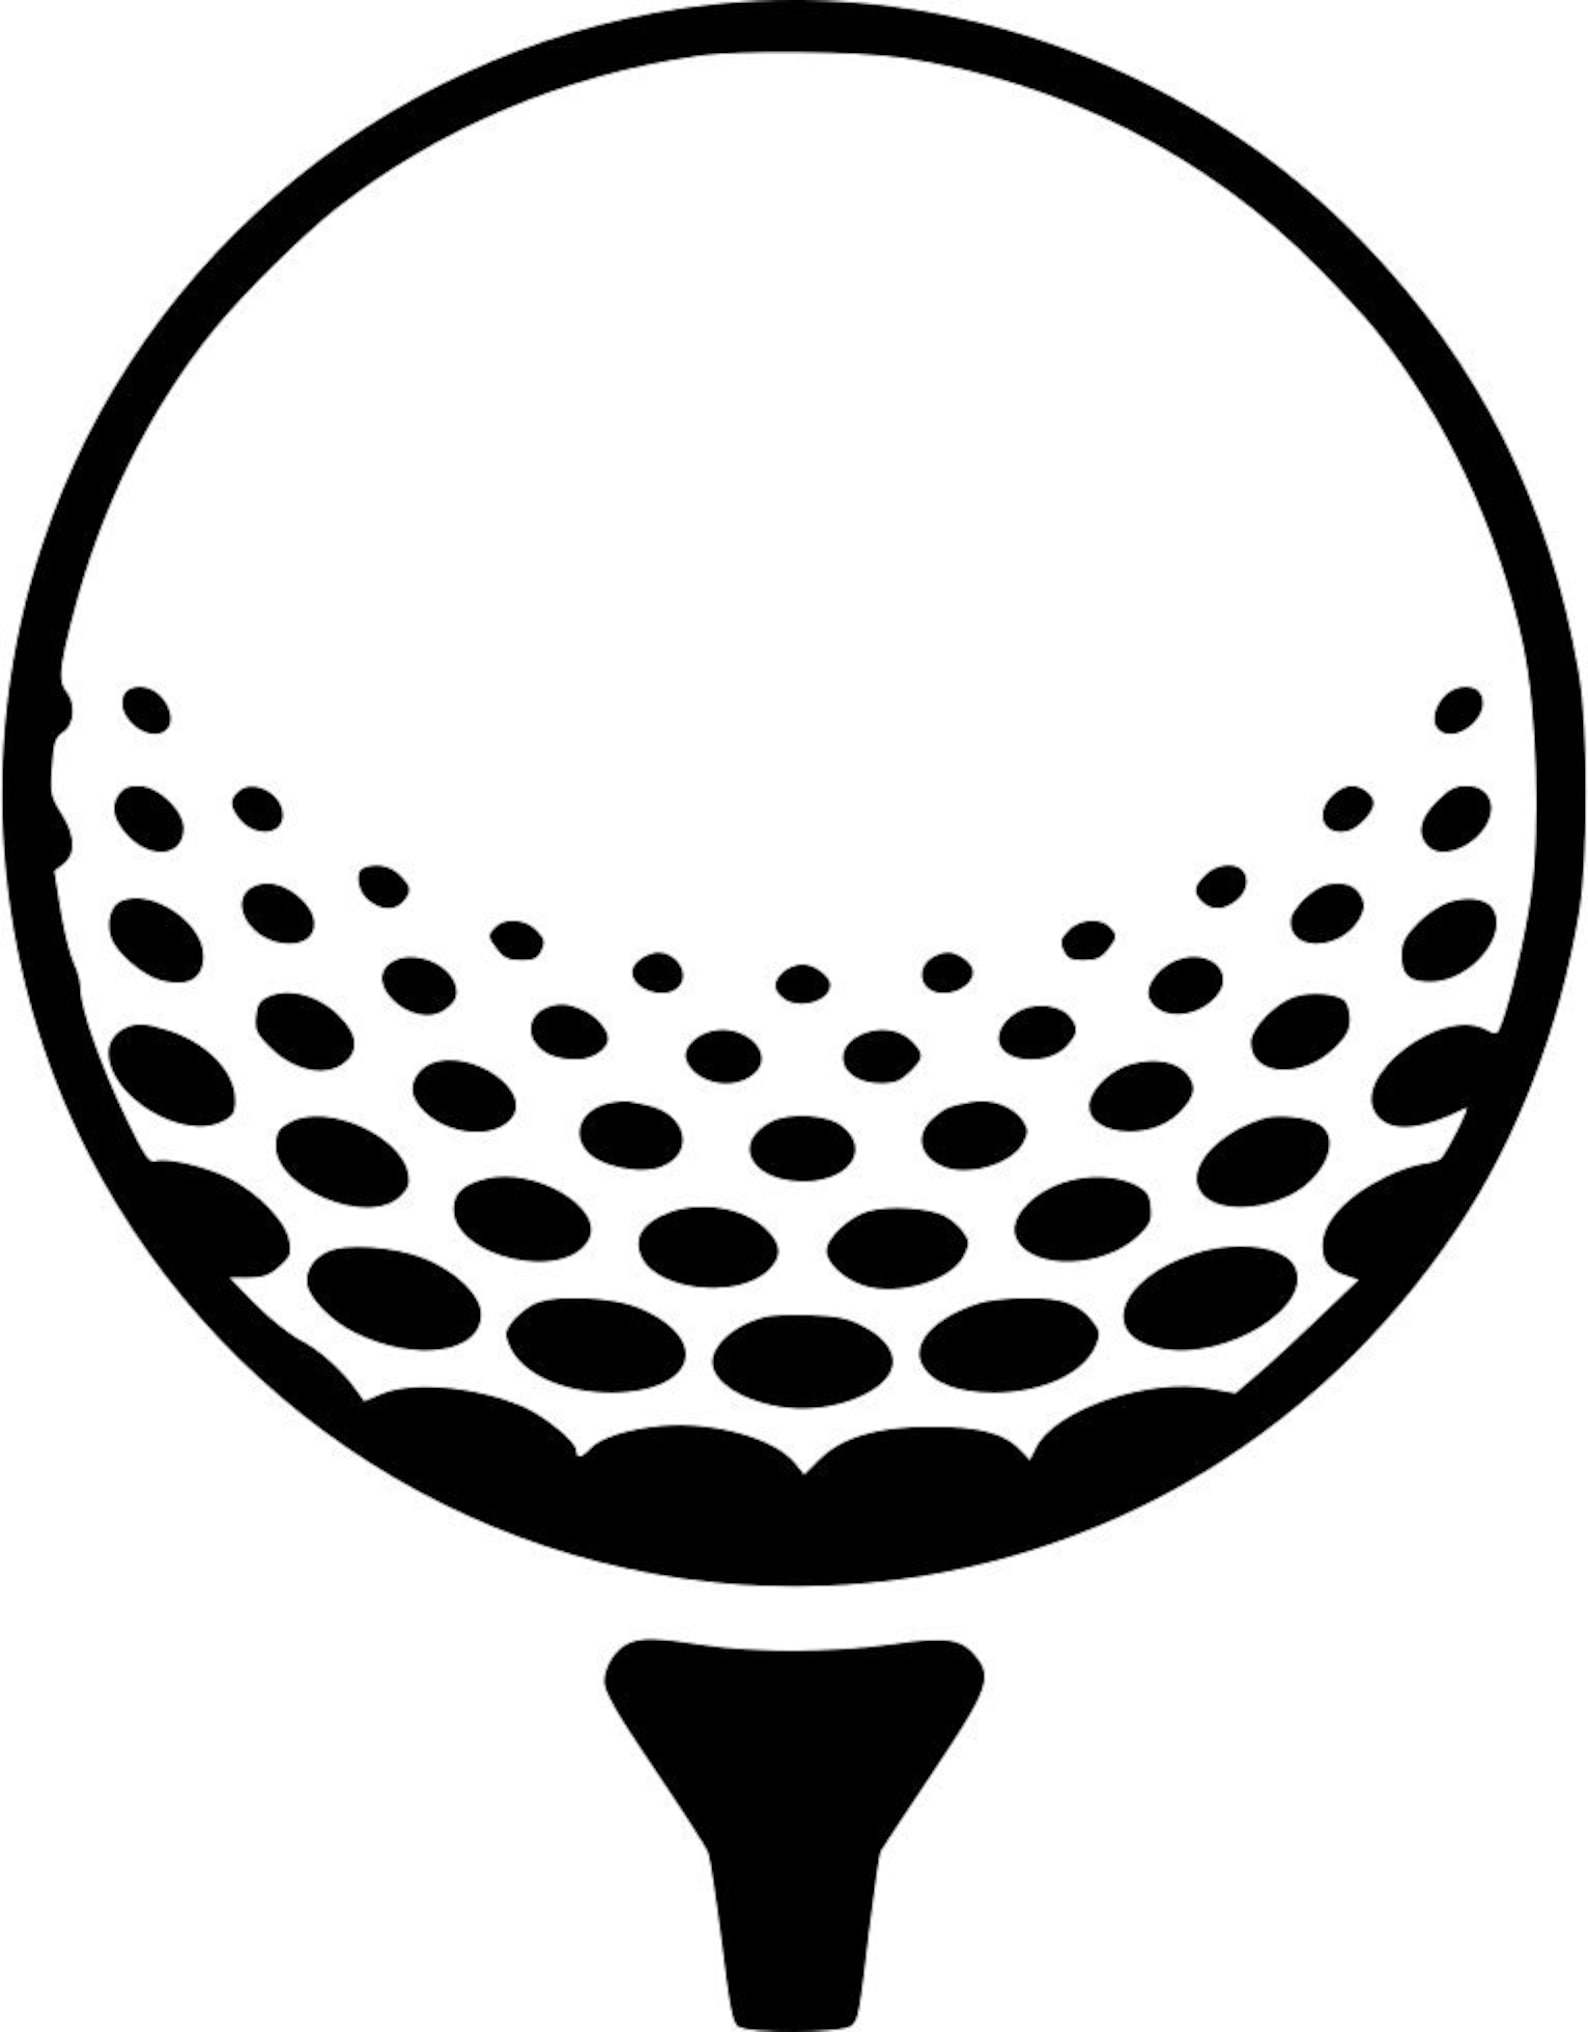 Golf ball SVG | Etsy